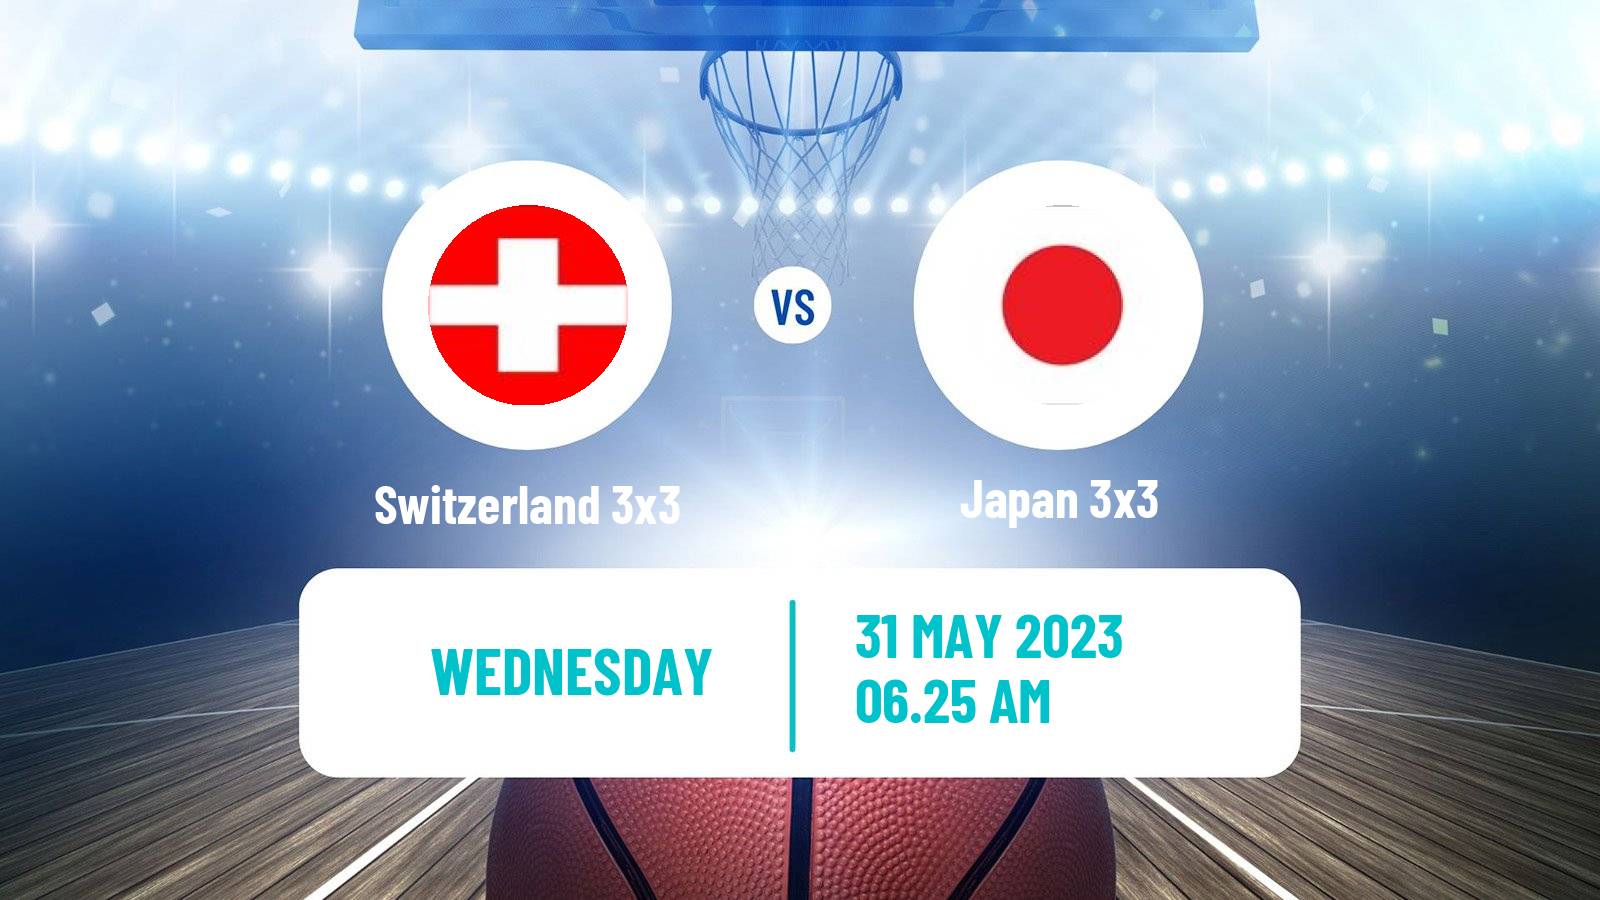 Basketball World Cup Basketball 3x3 Switzerland 3x3 - Japan 3x3